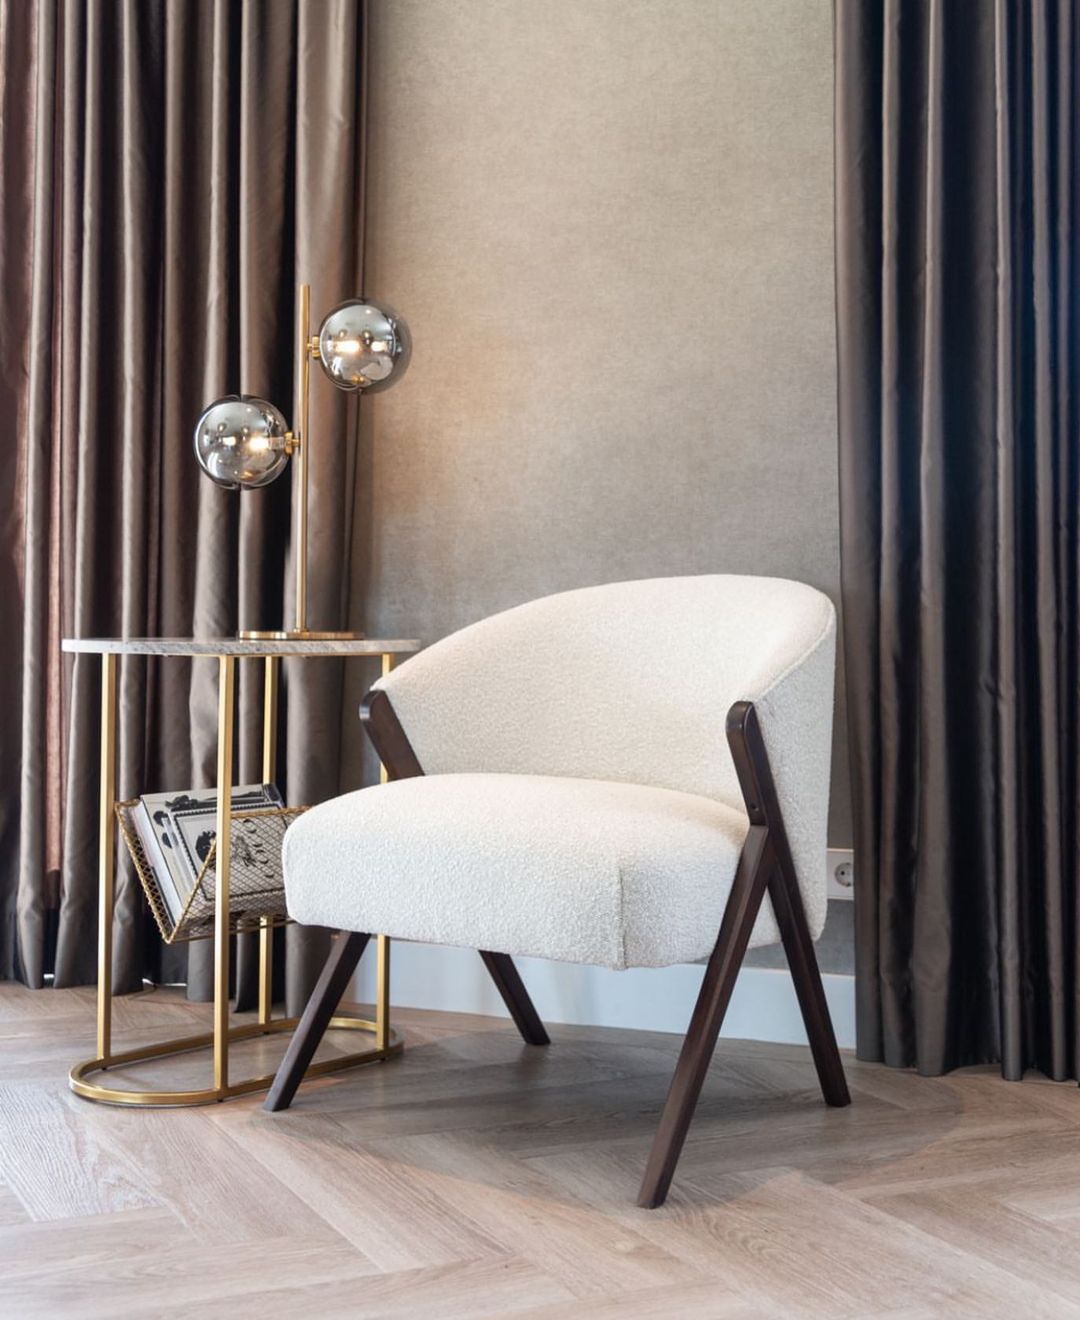 White modern armchair near a golden side table.